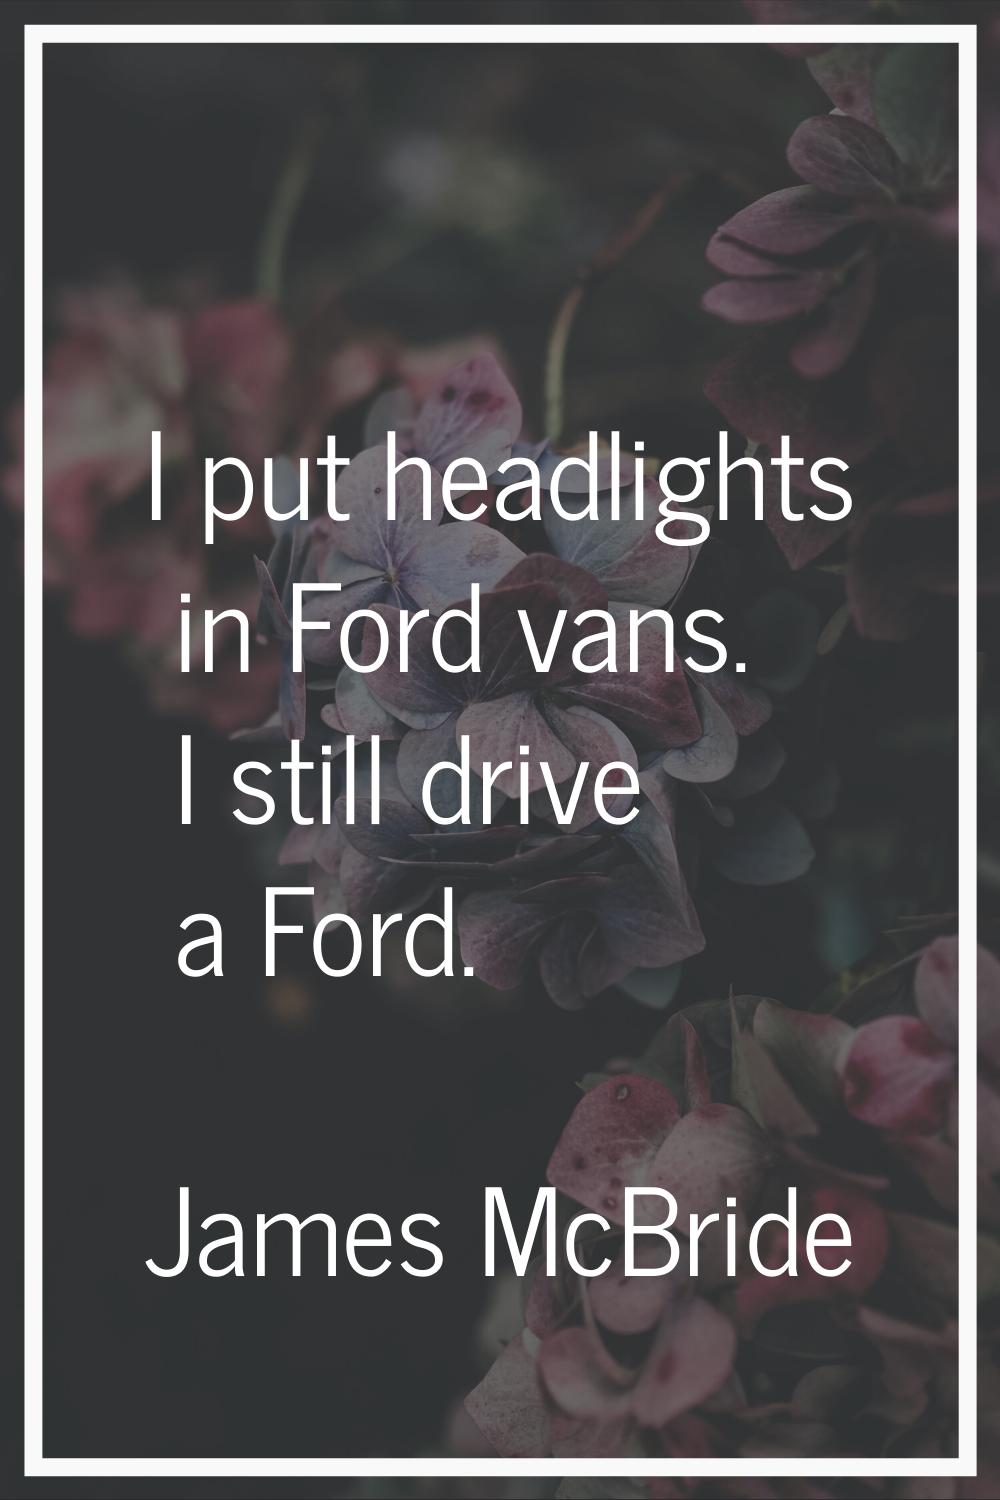 I put headlights in Ford vans. I still drive a Ford.